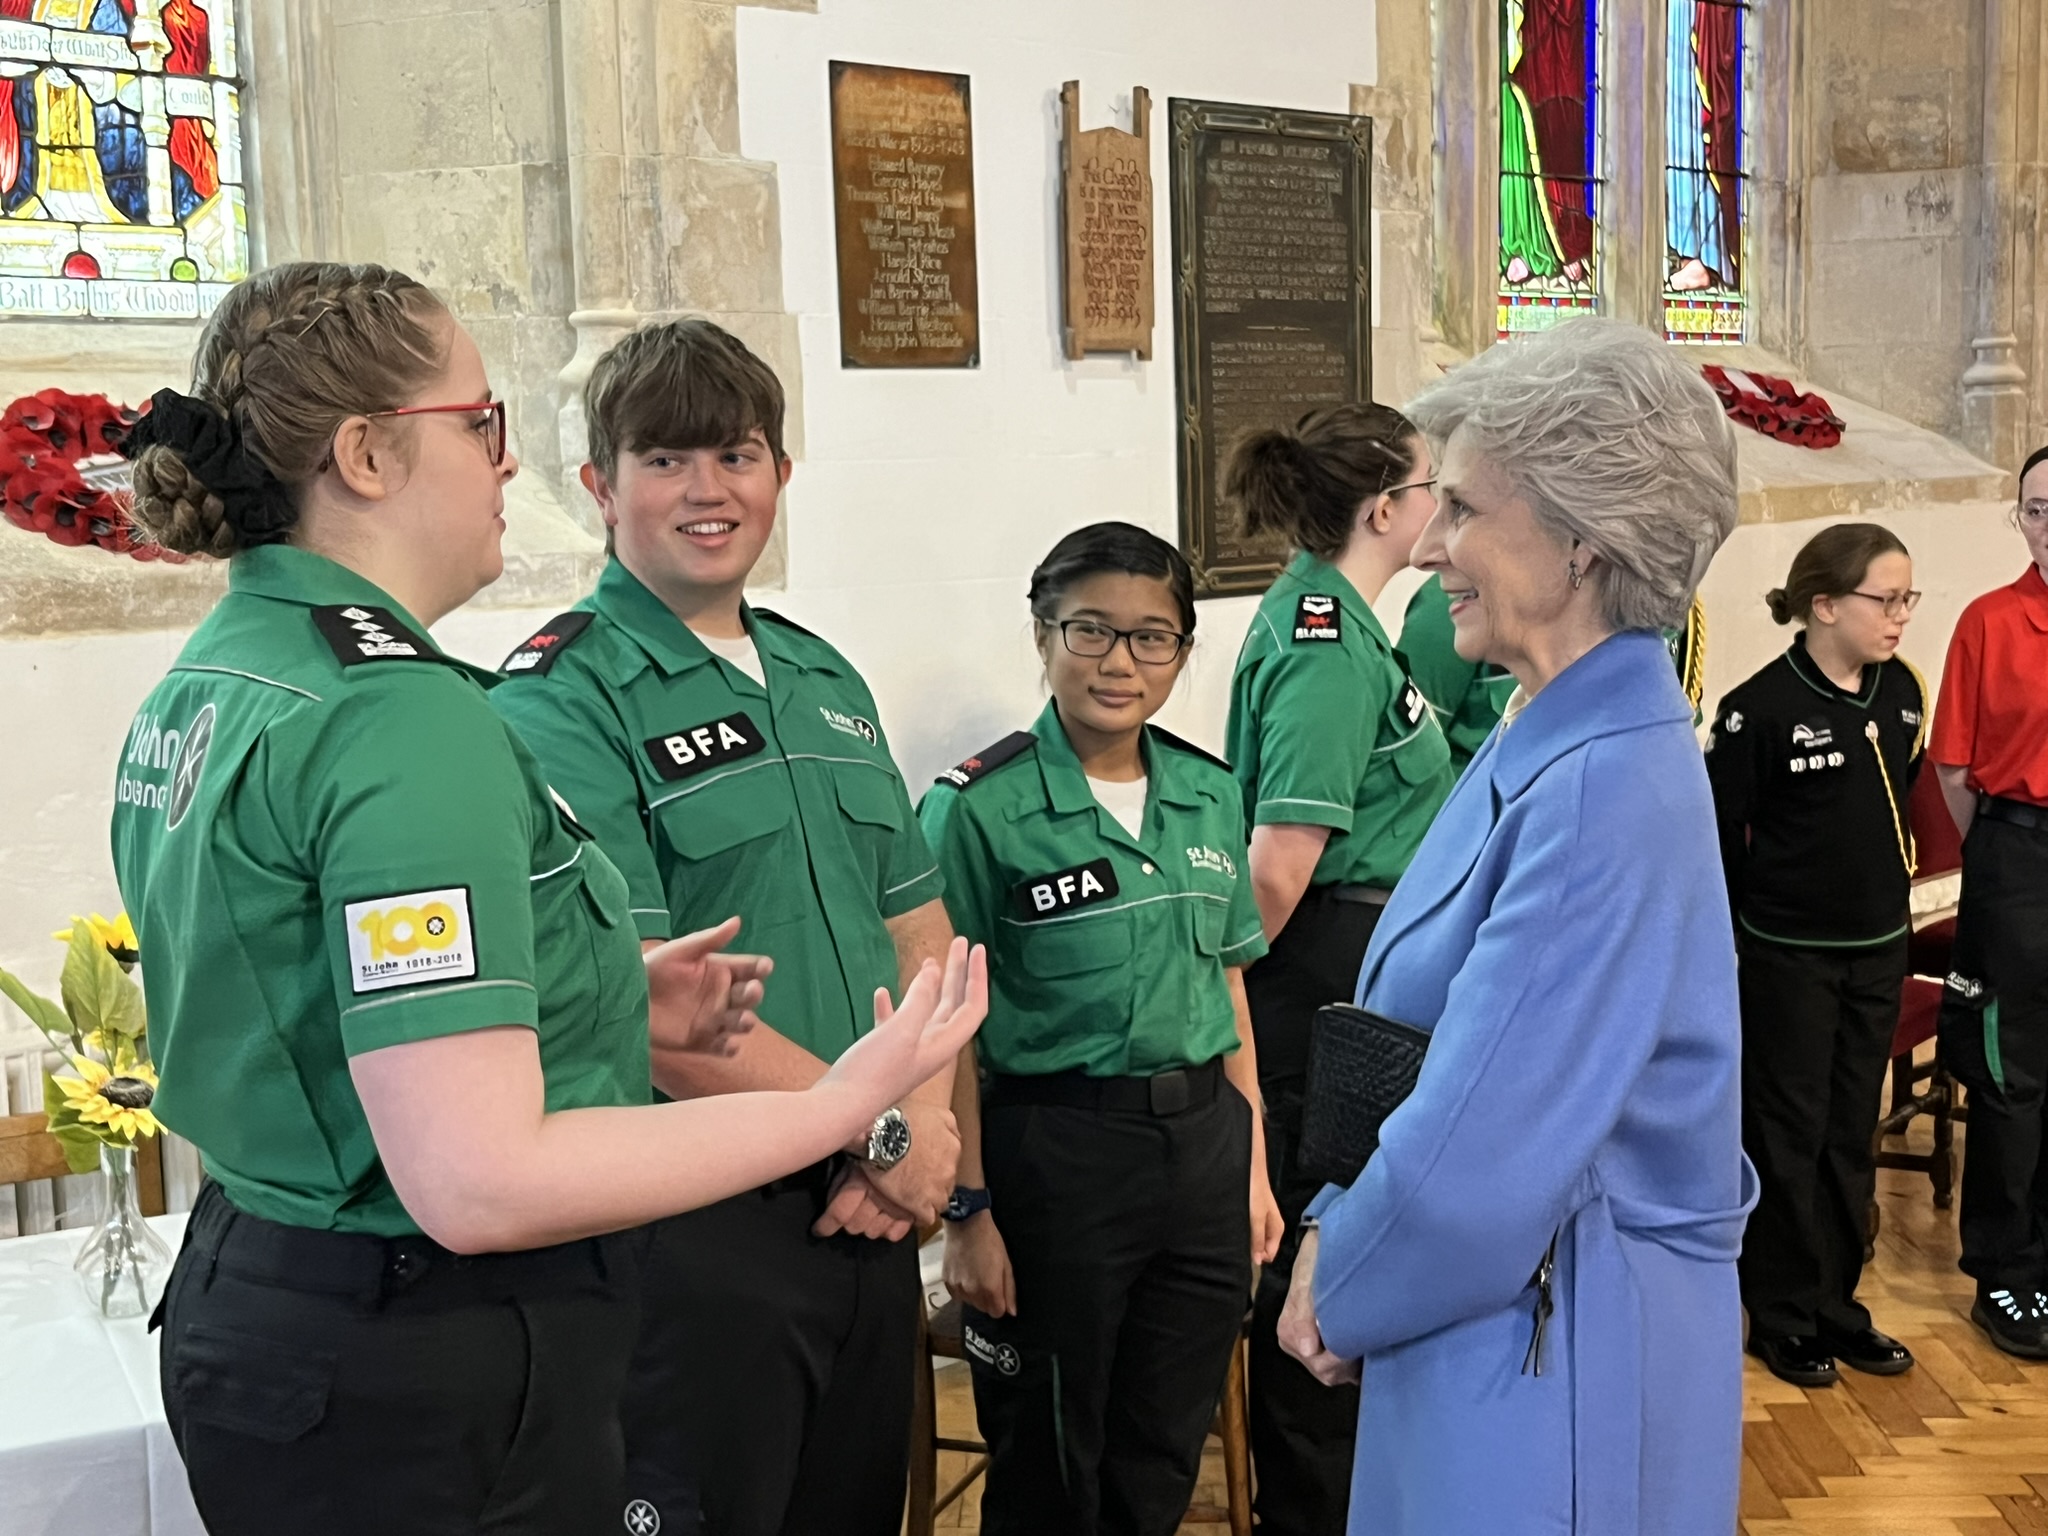 The Duchess also met adult volunteers who fulfil various vital roles for St John Ambulance Cymru